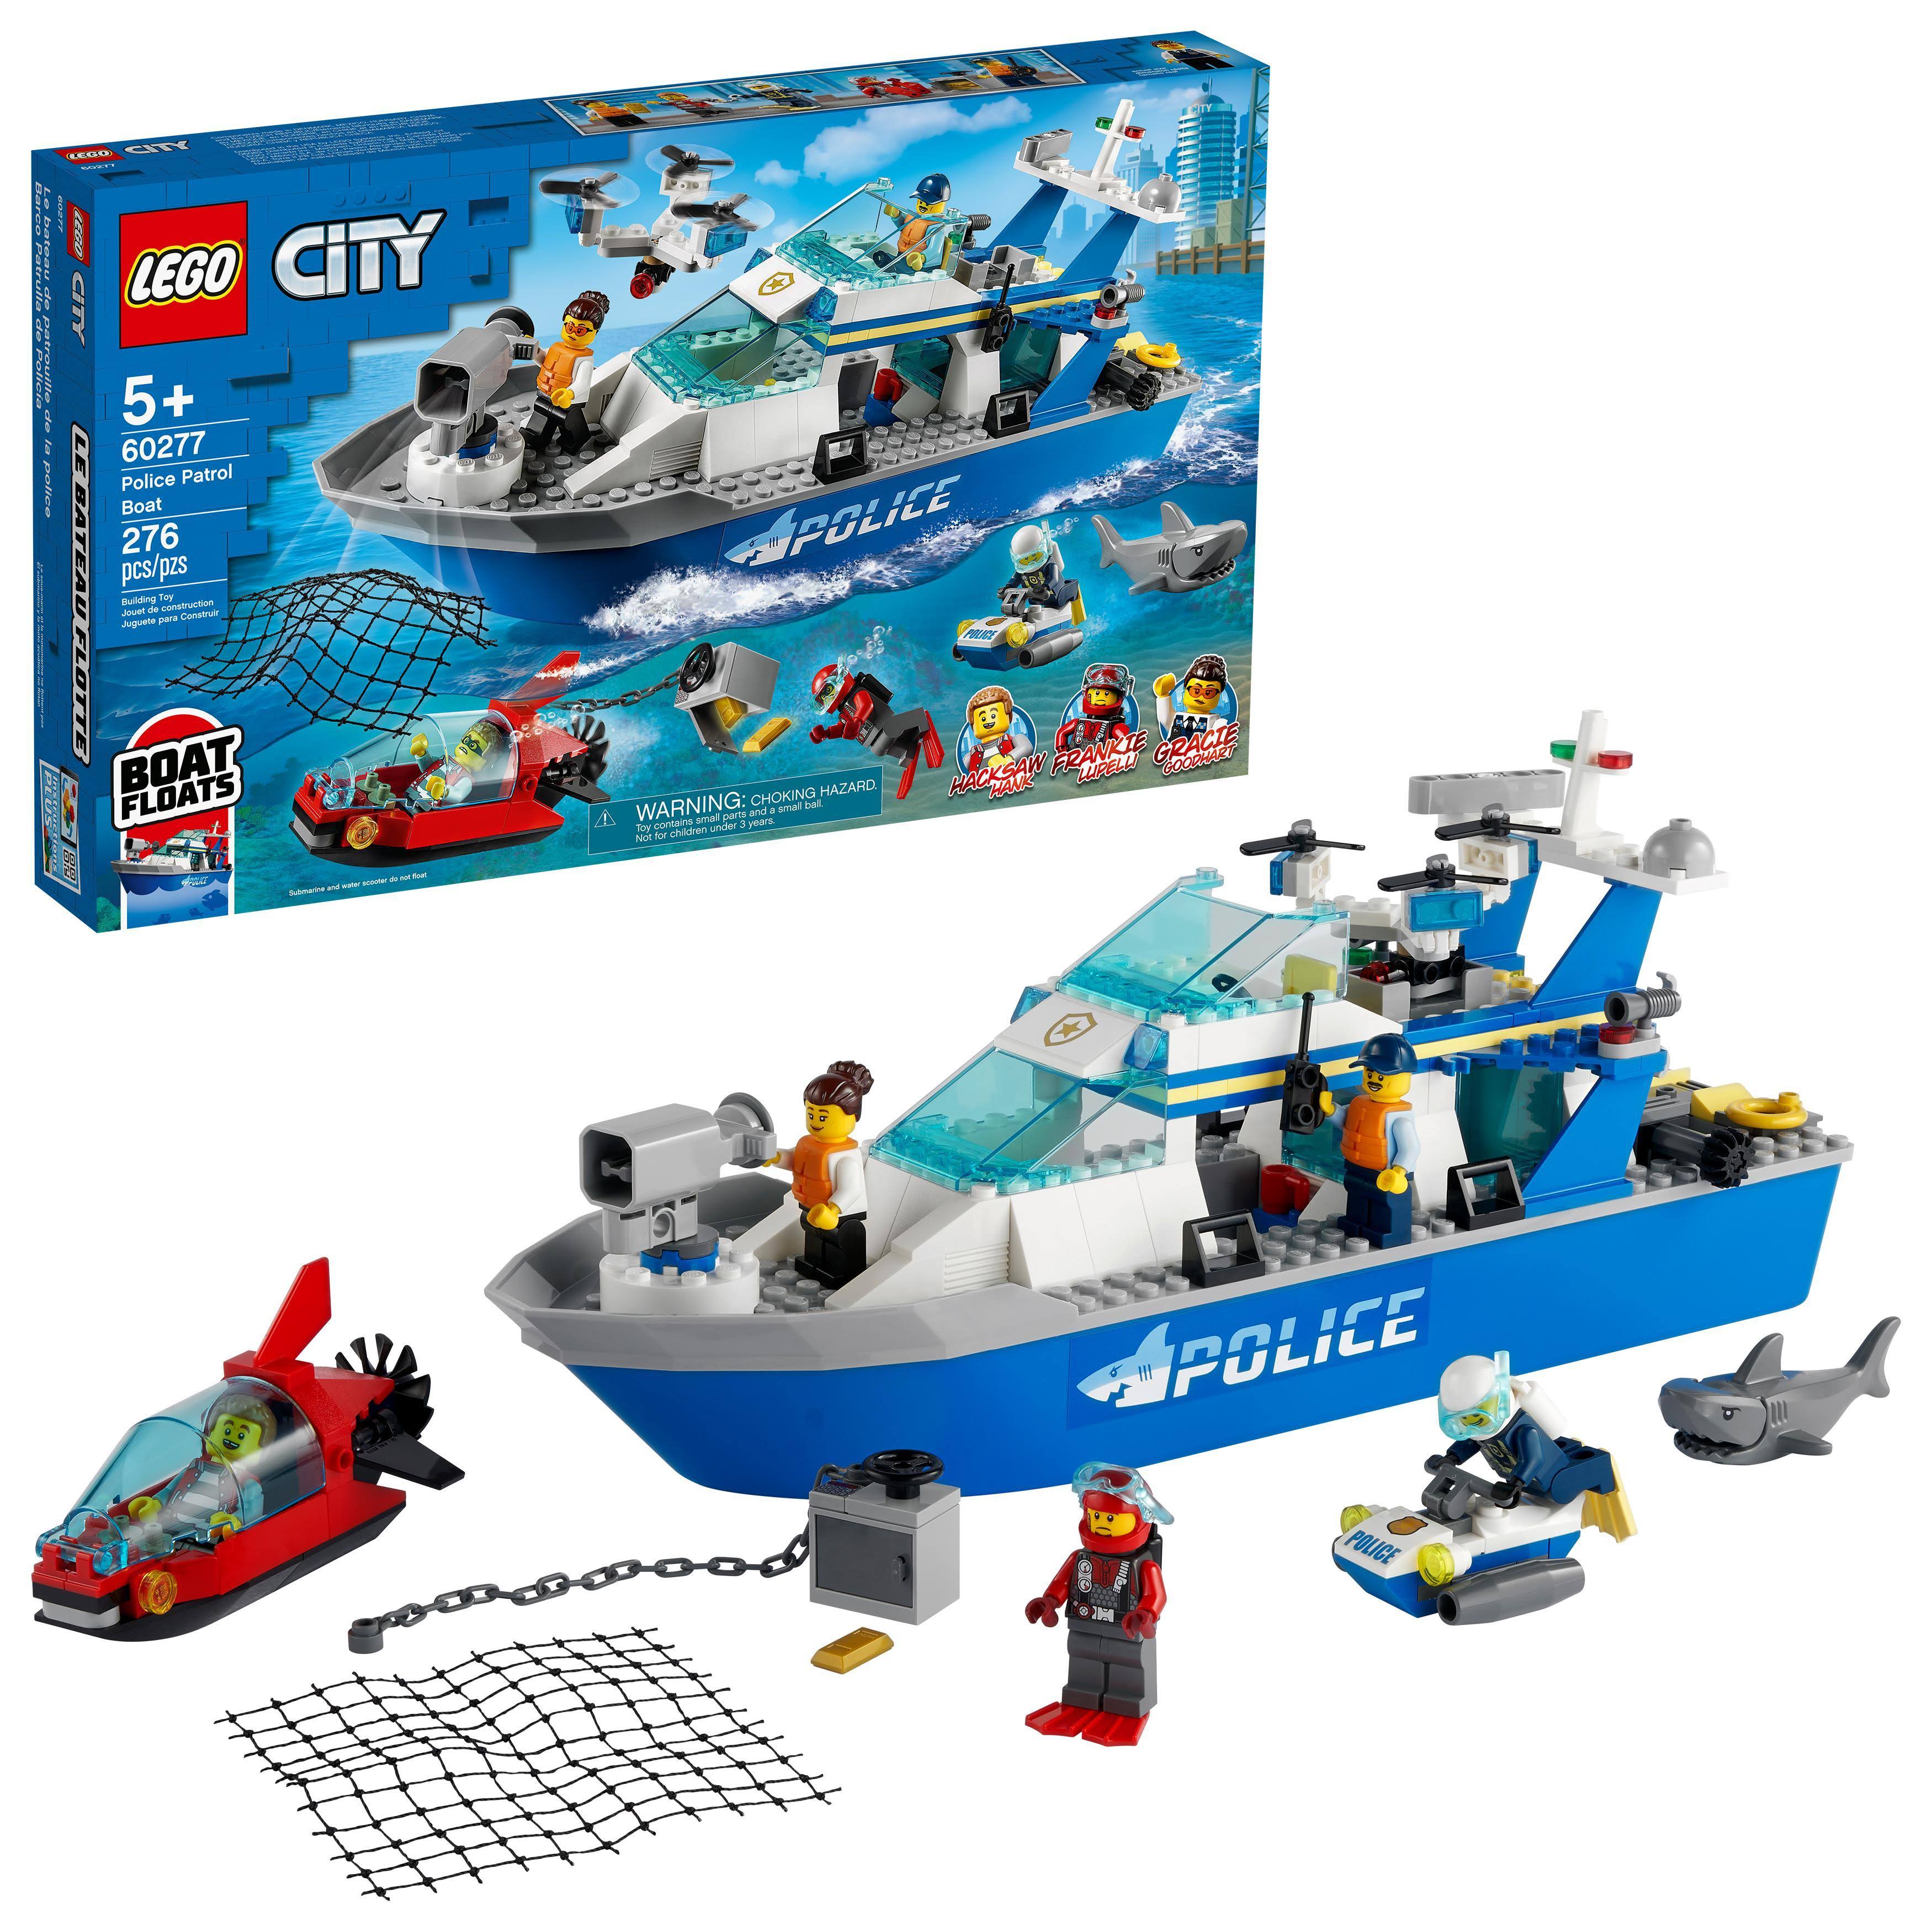 Lego 60277 City Police Patrol Boat